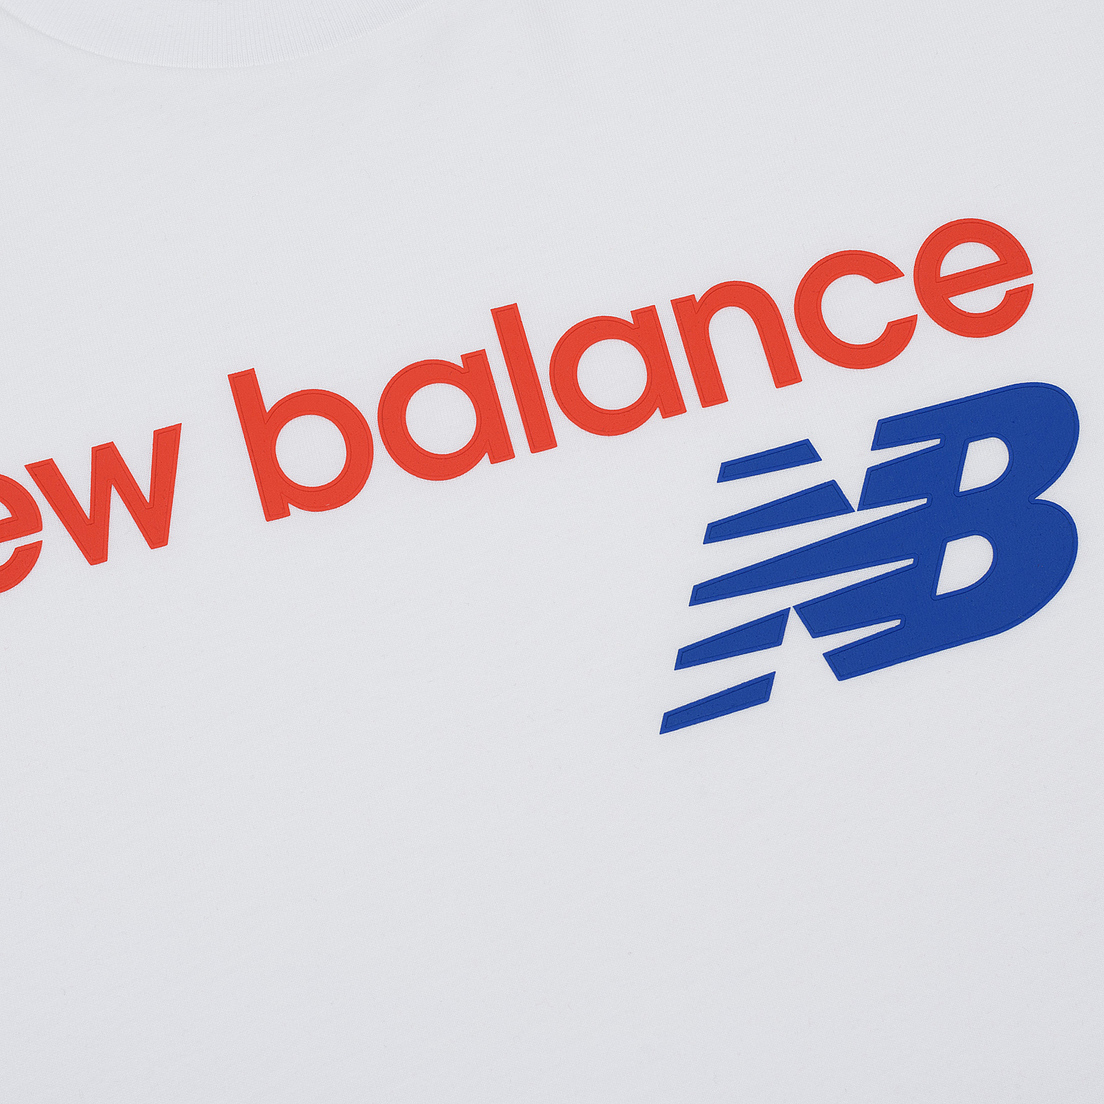 New Balance Мужская футболка Athletics WC